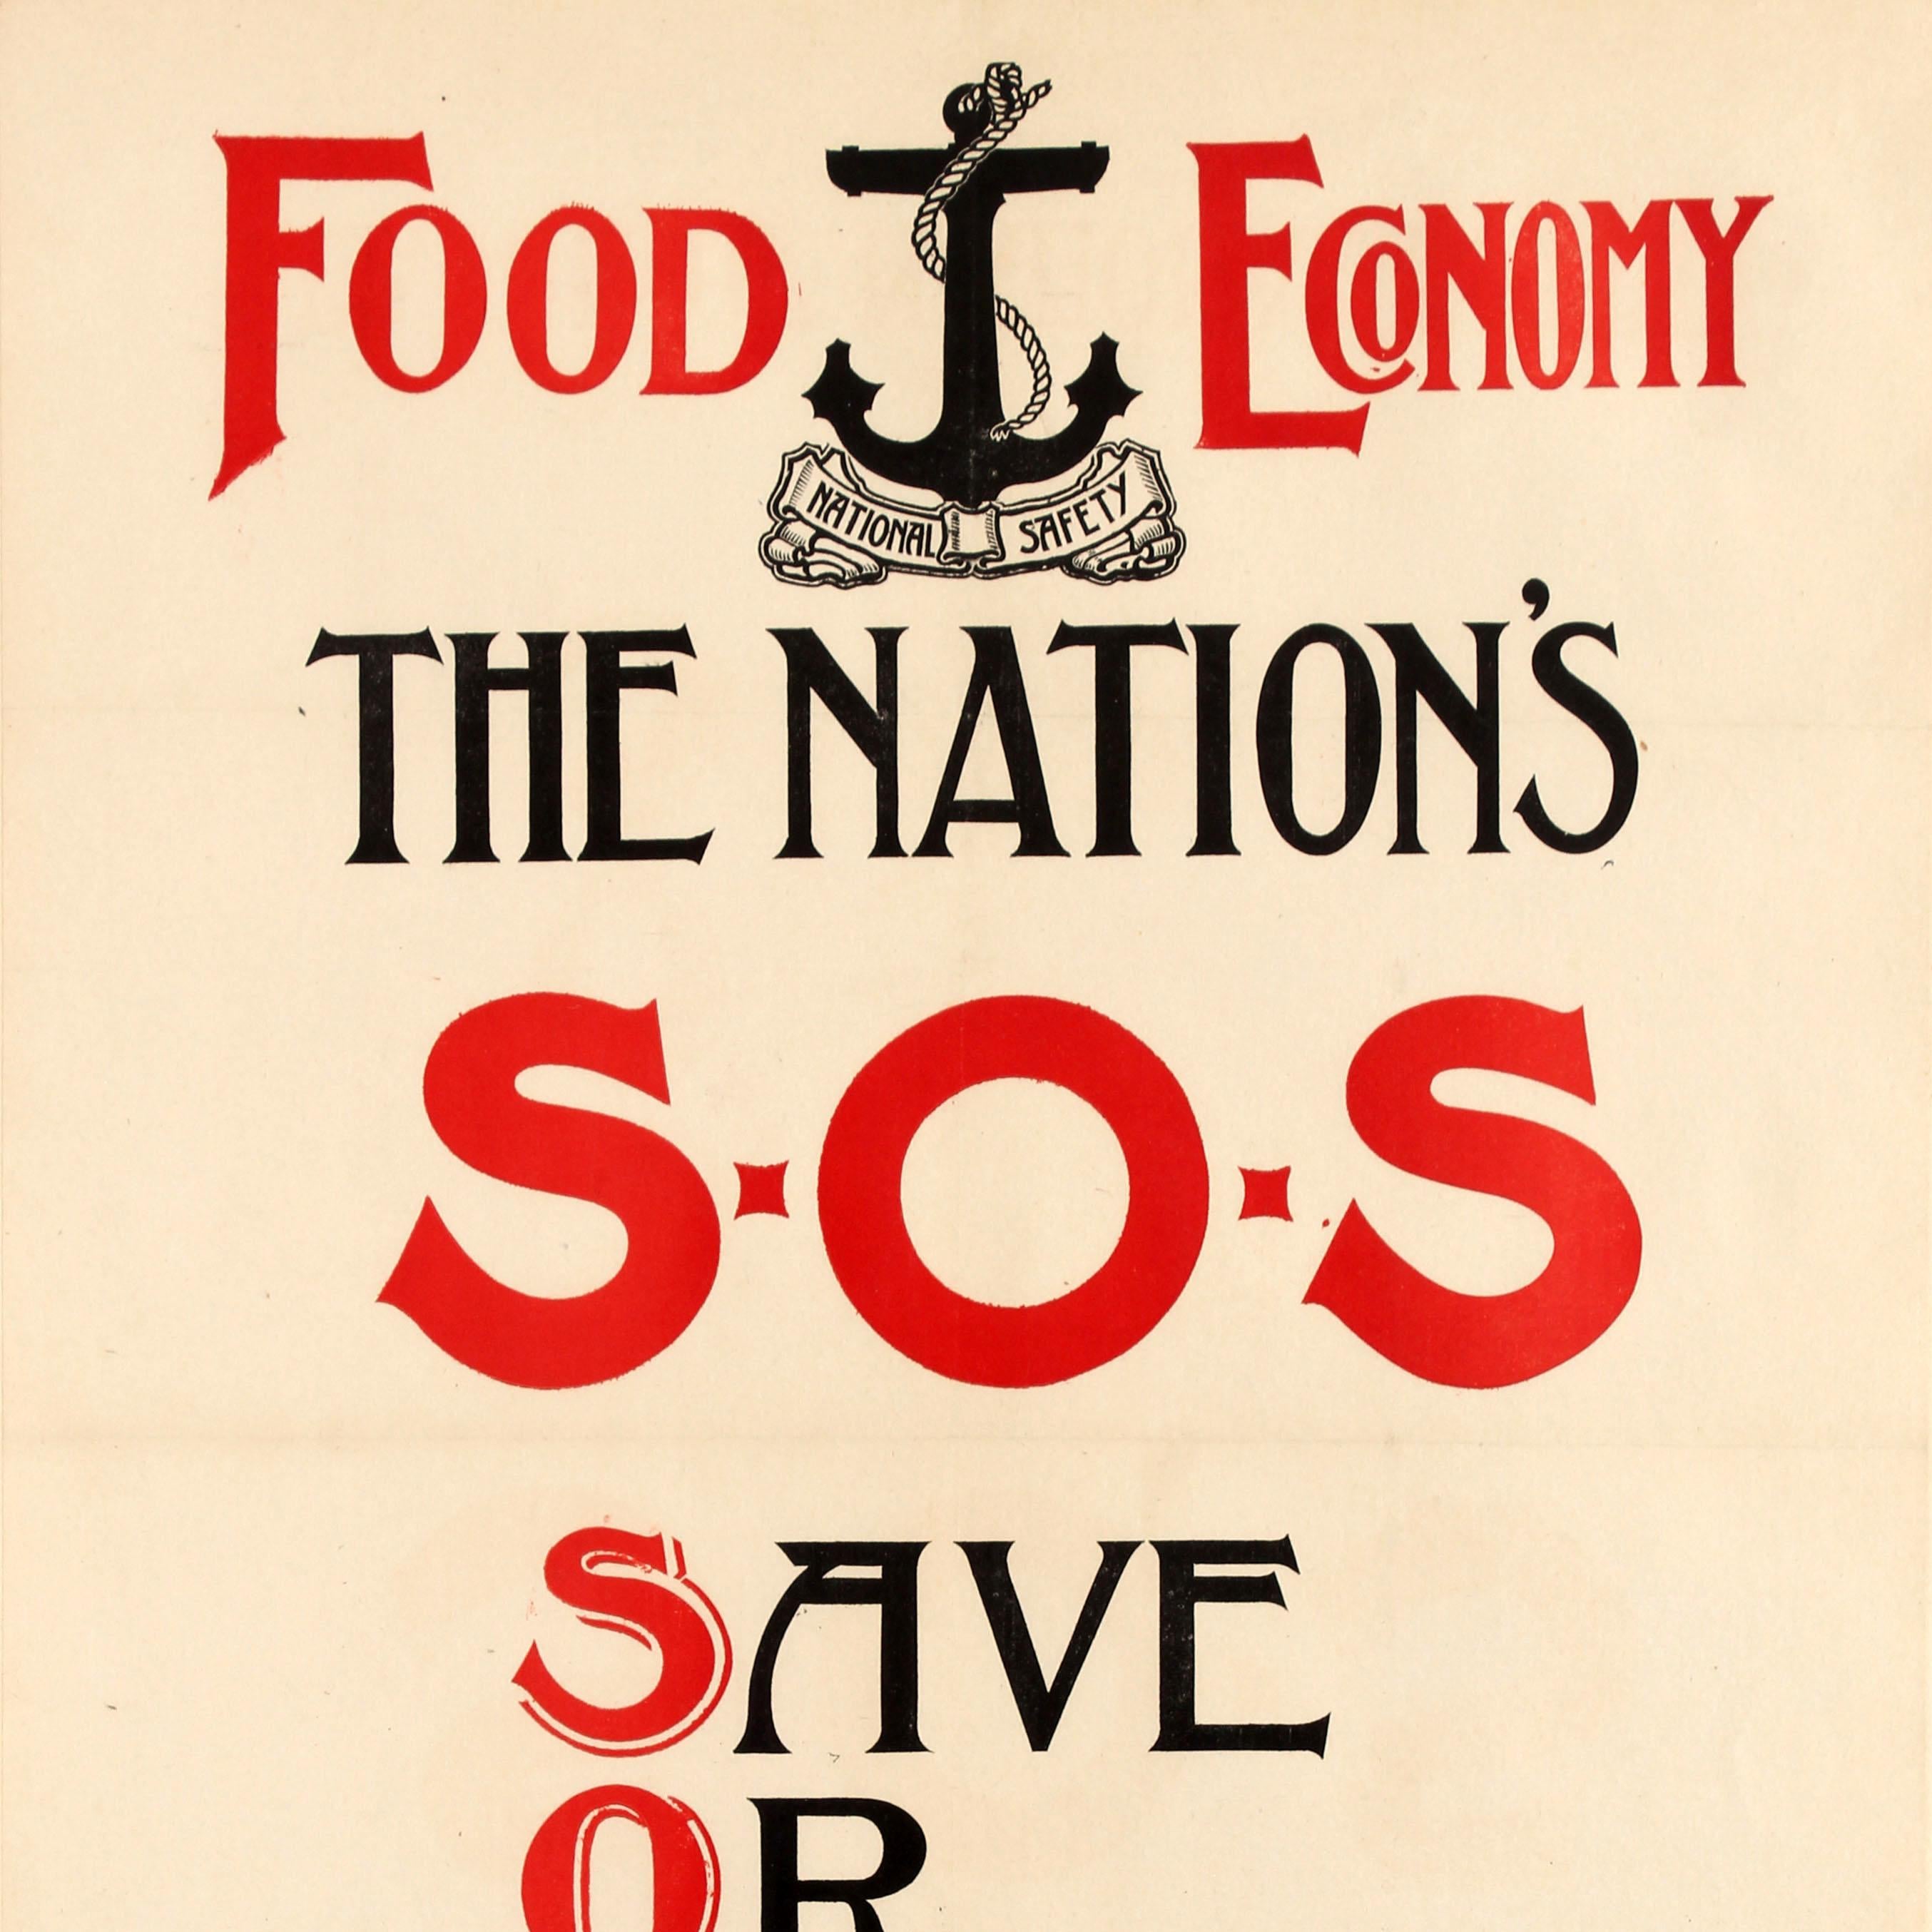 ww1 propaganda posters about food